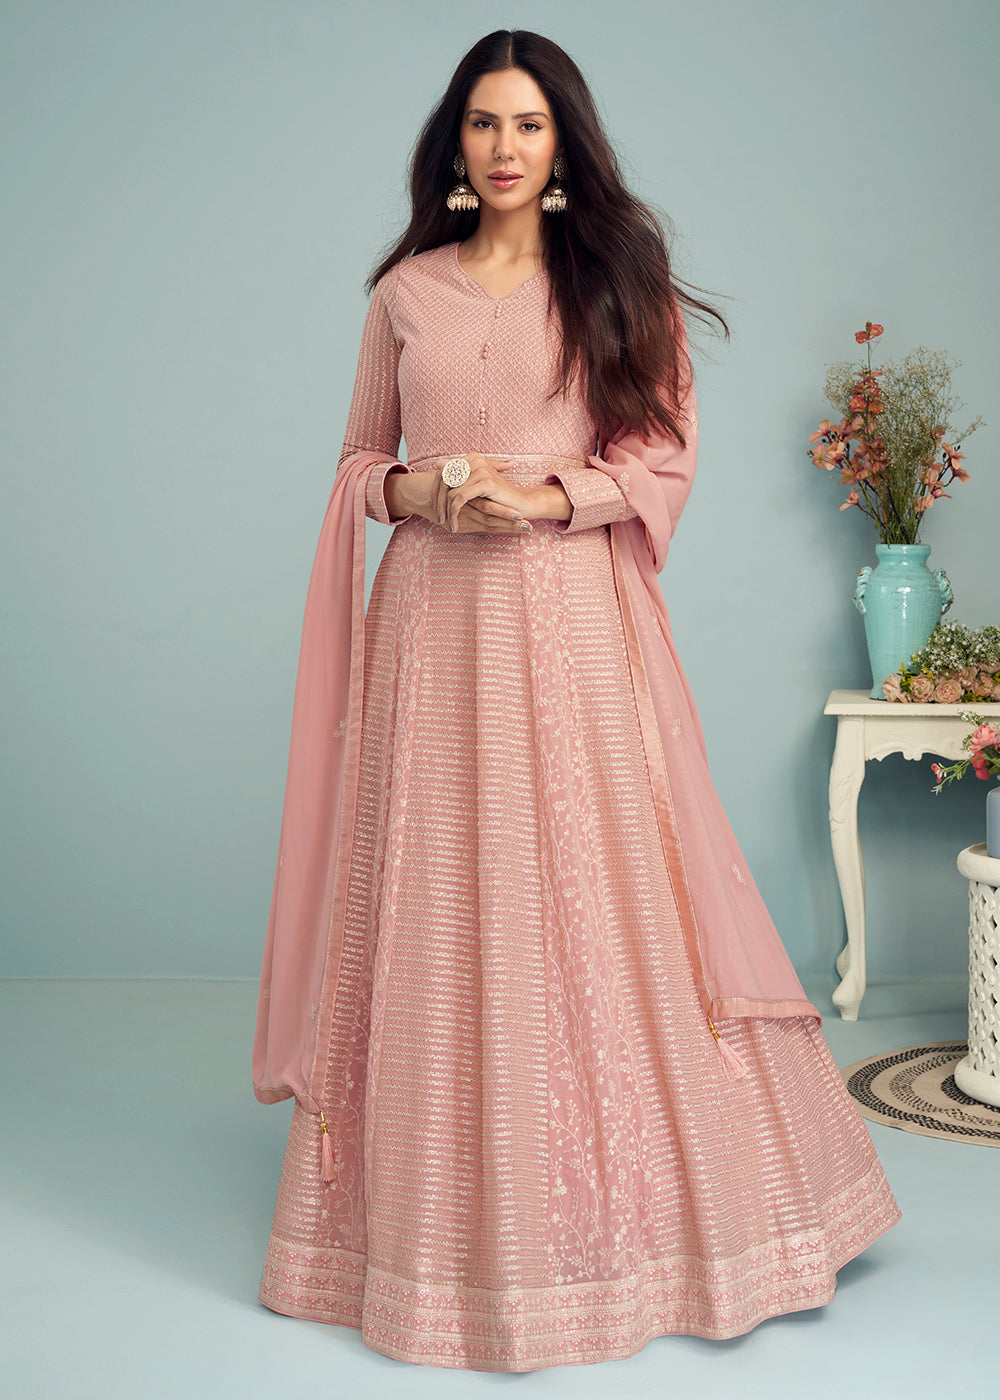 Shop Now Pleasing Peach Georgette Embellished Wedding Anarkali Suit Online featuring Sonam Bajwa at Empress Clothing in UK.